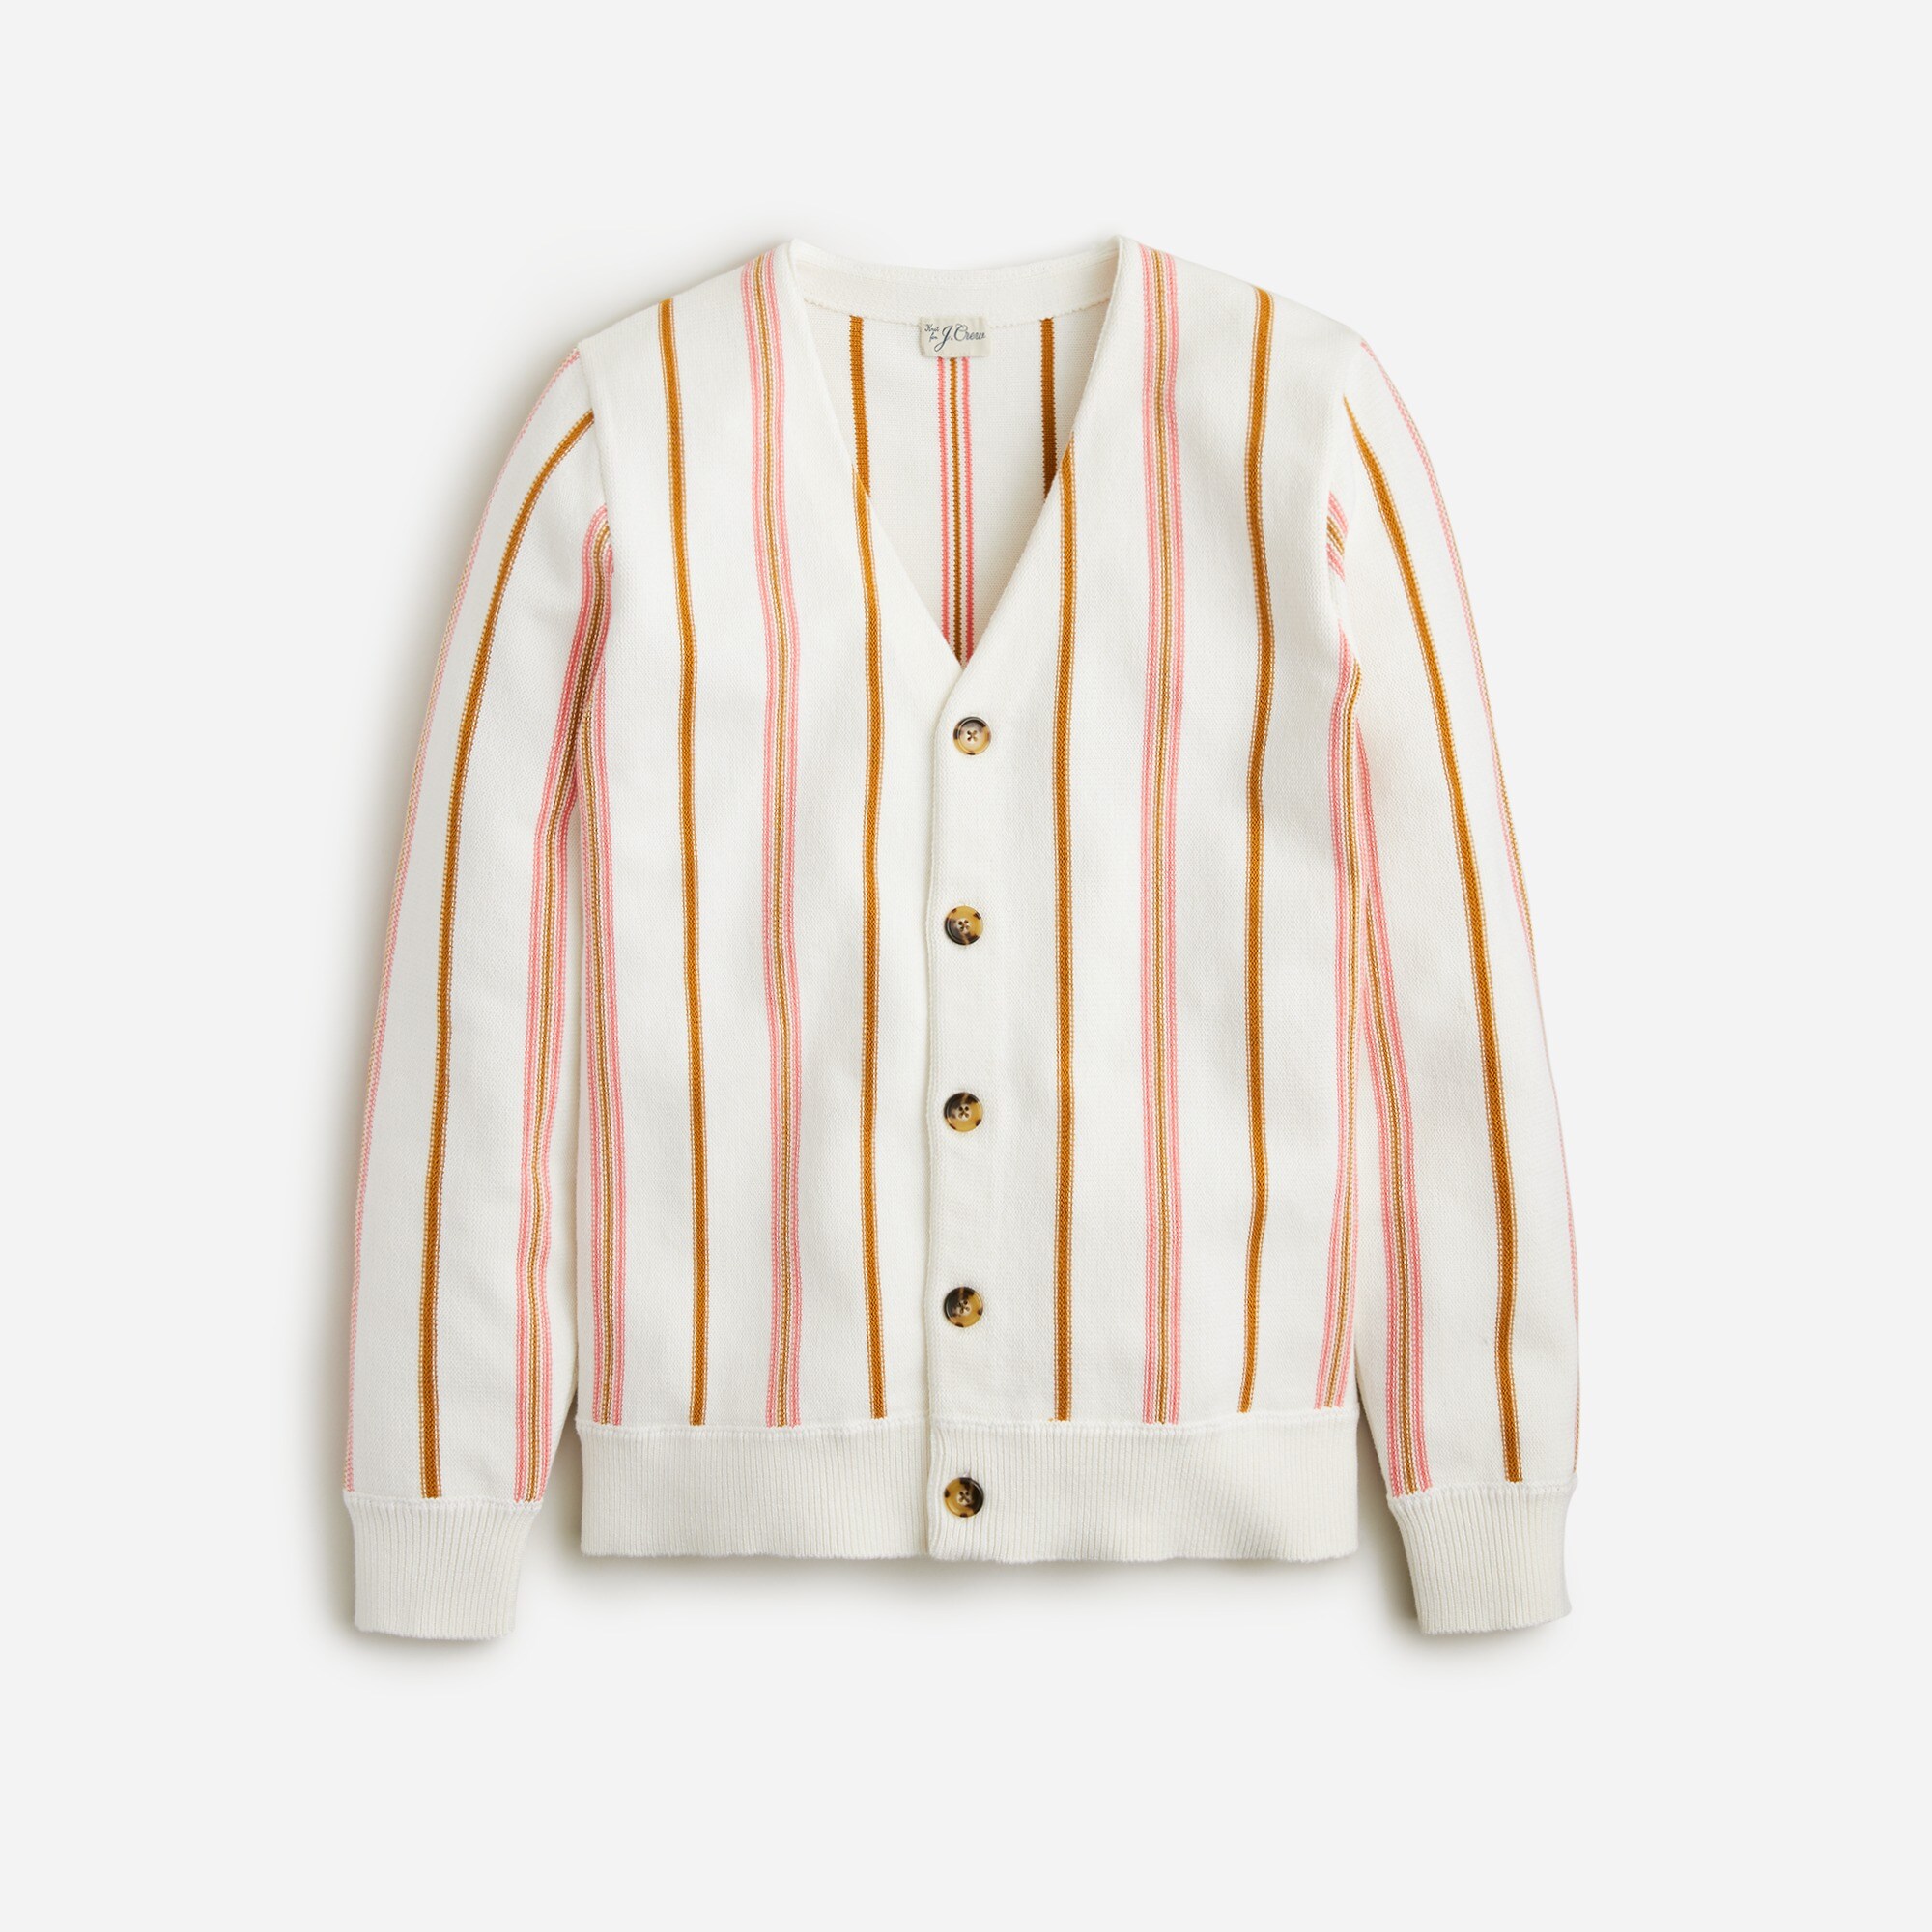  Heritage cotton cardigan sweater in stripe